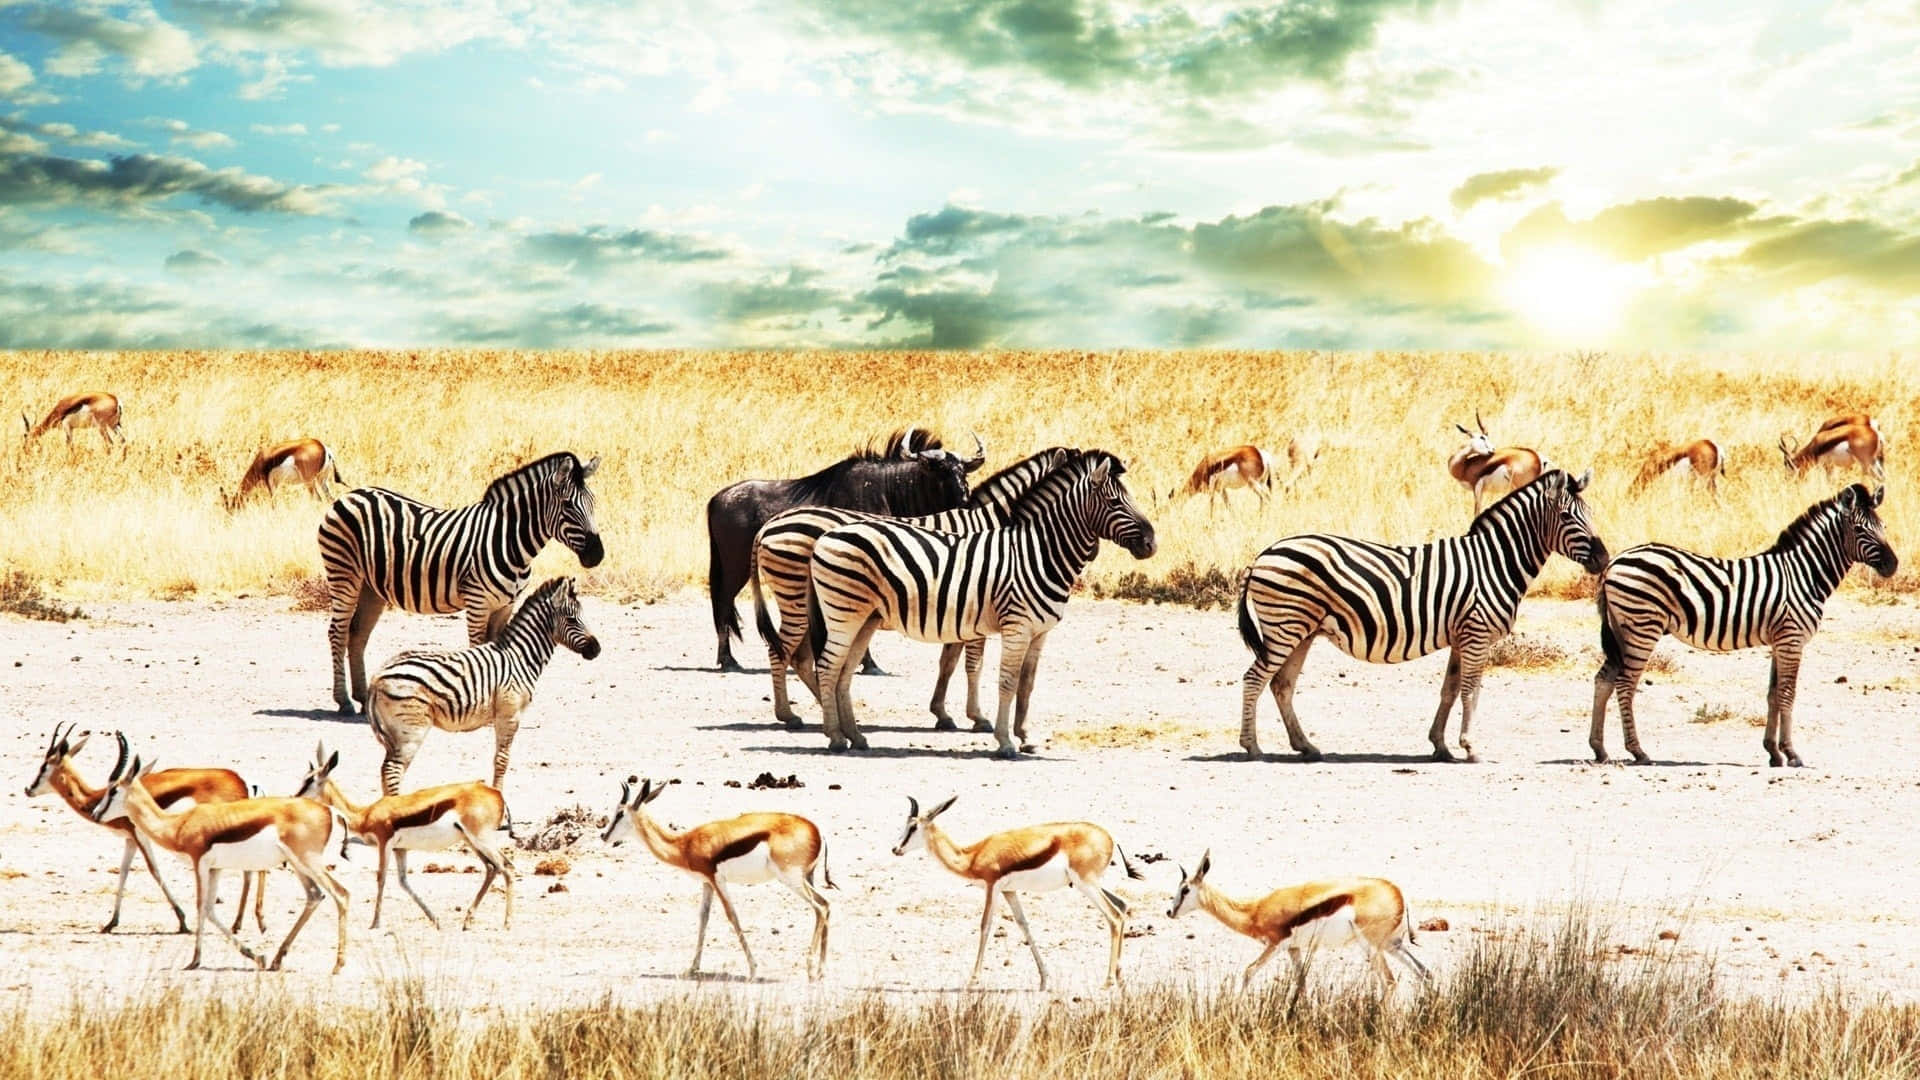 running across an open plain - En gruppe zebraer løbe over et åbent engeland Wallpaper